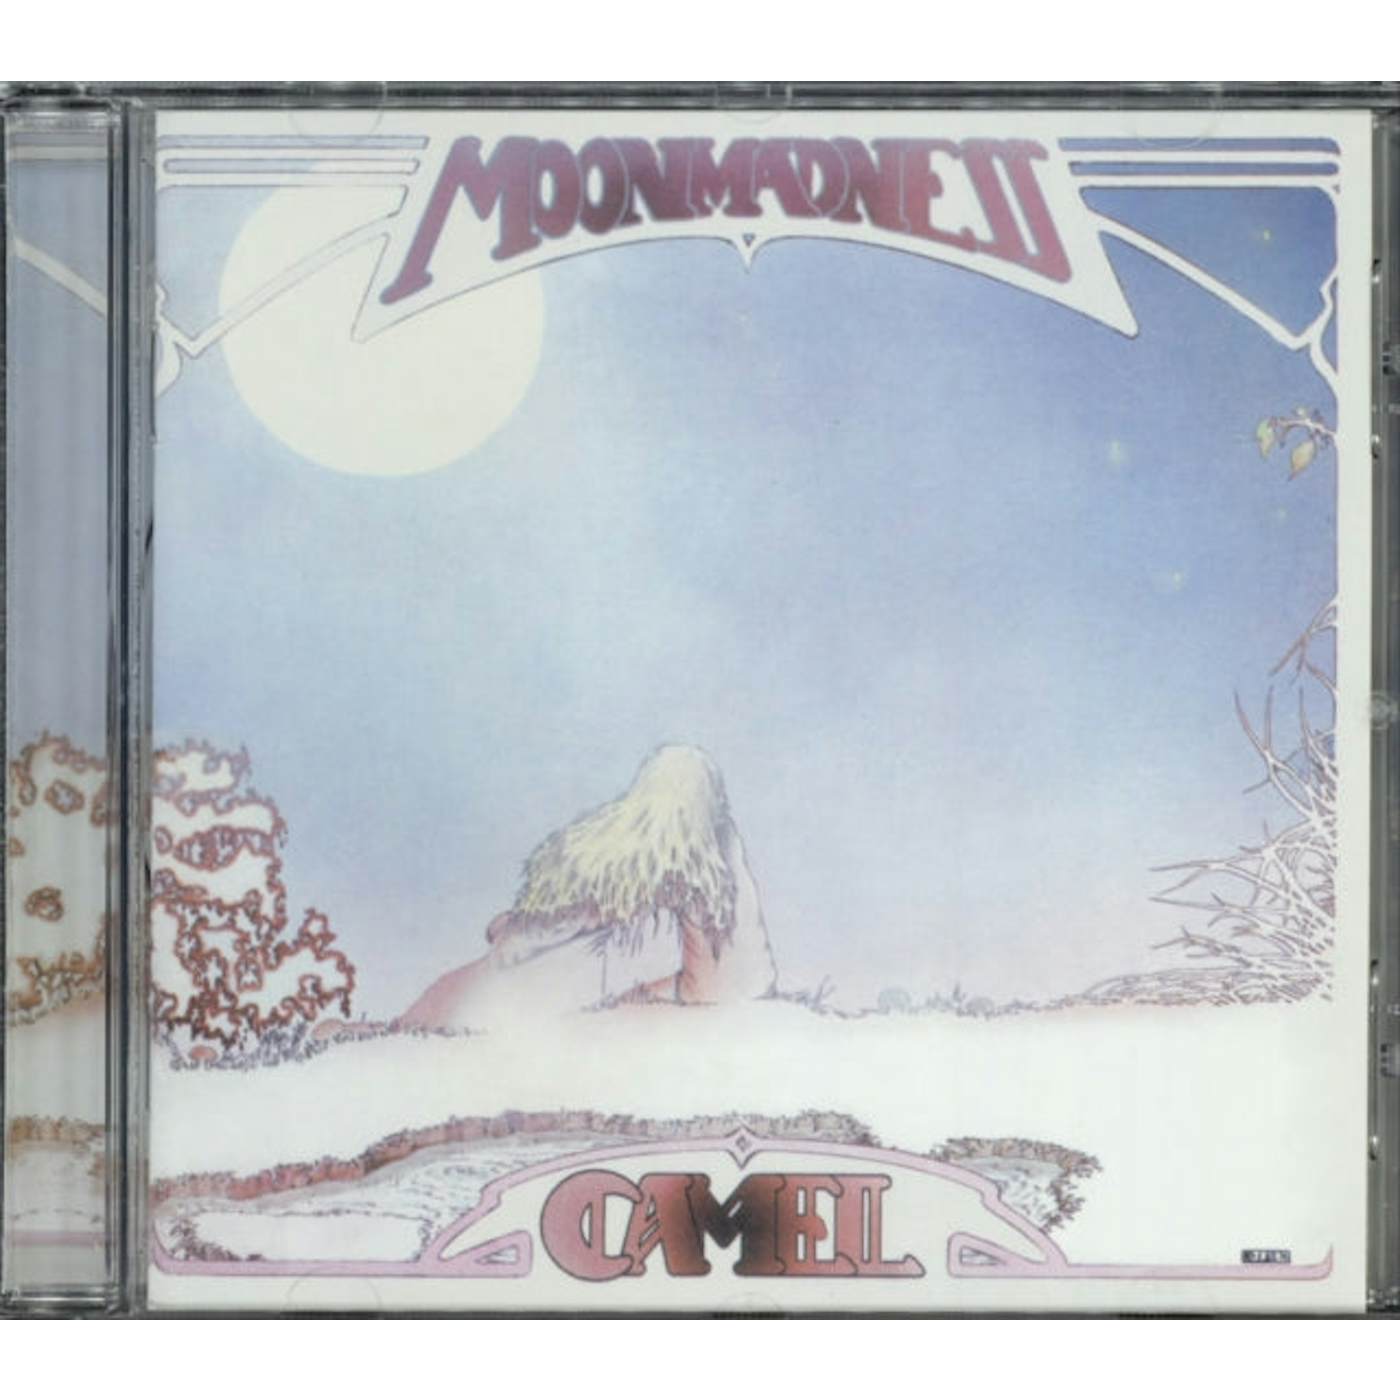 Camel CD - Moonmadness